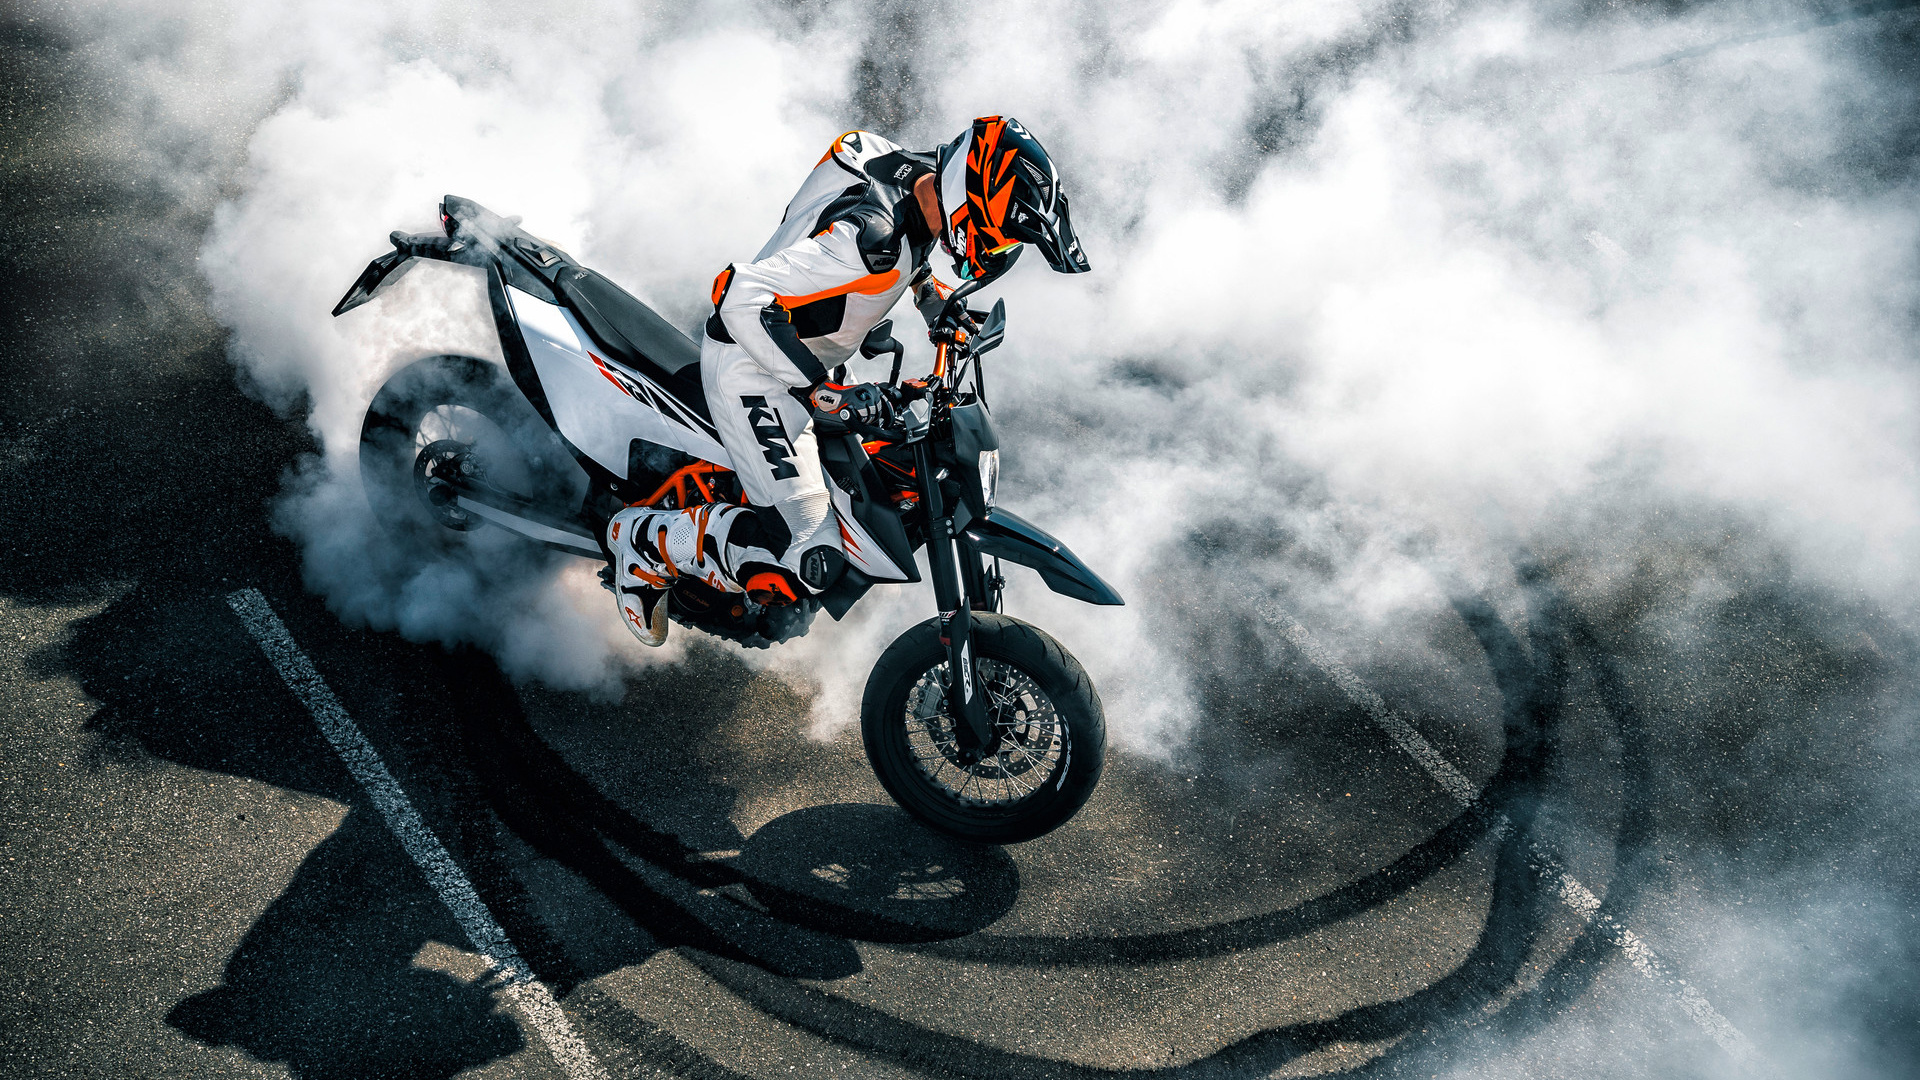 Stunt: KTM 690 Enduro bike, Burnout by a professional stuntman. 1920x1080 Full HD Background.